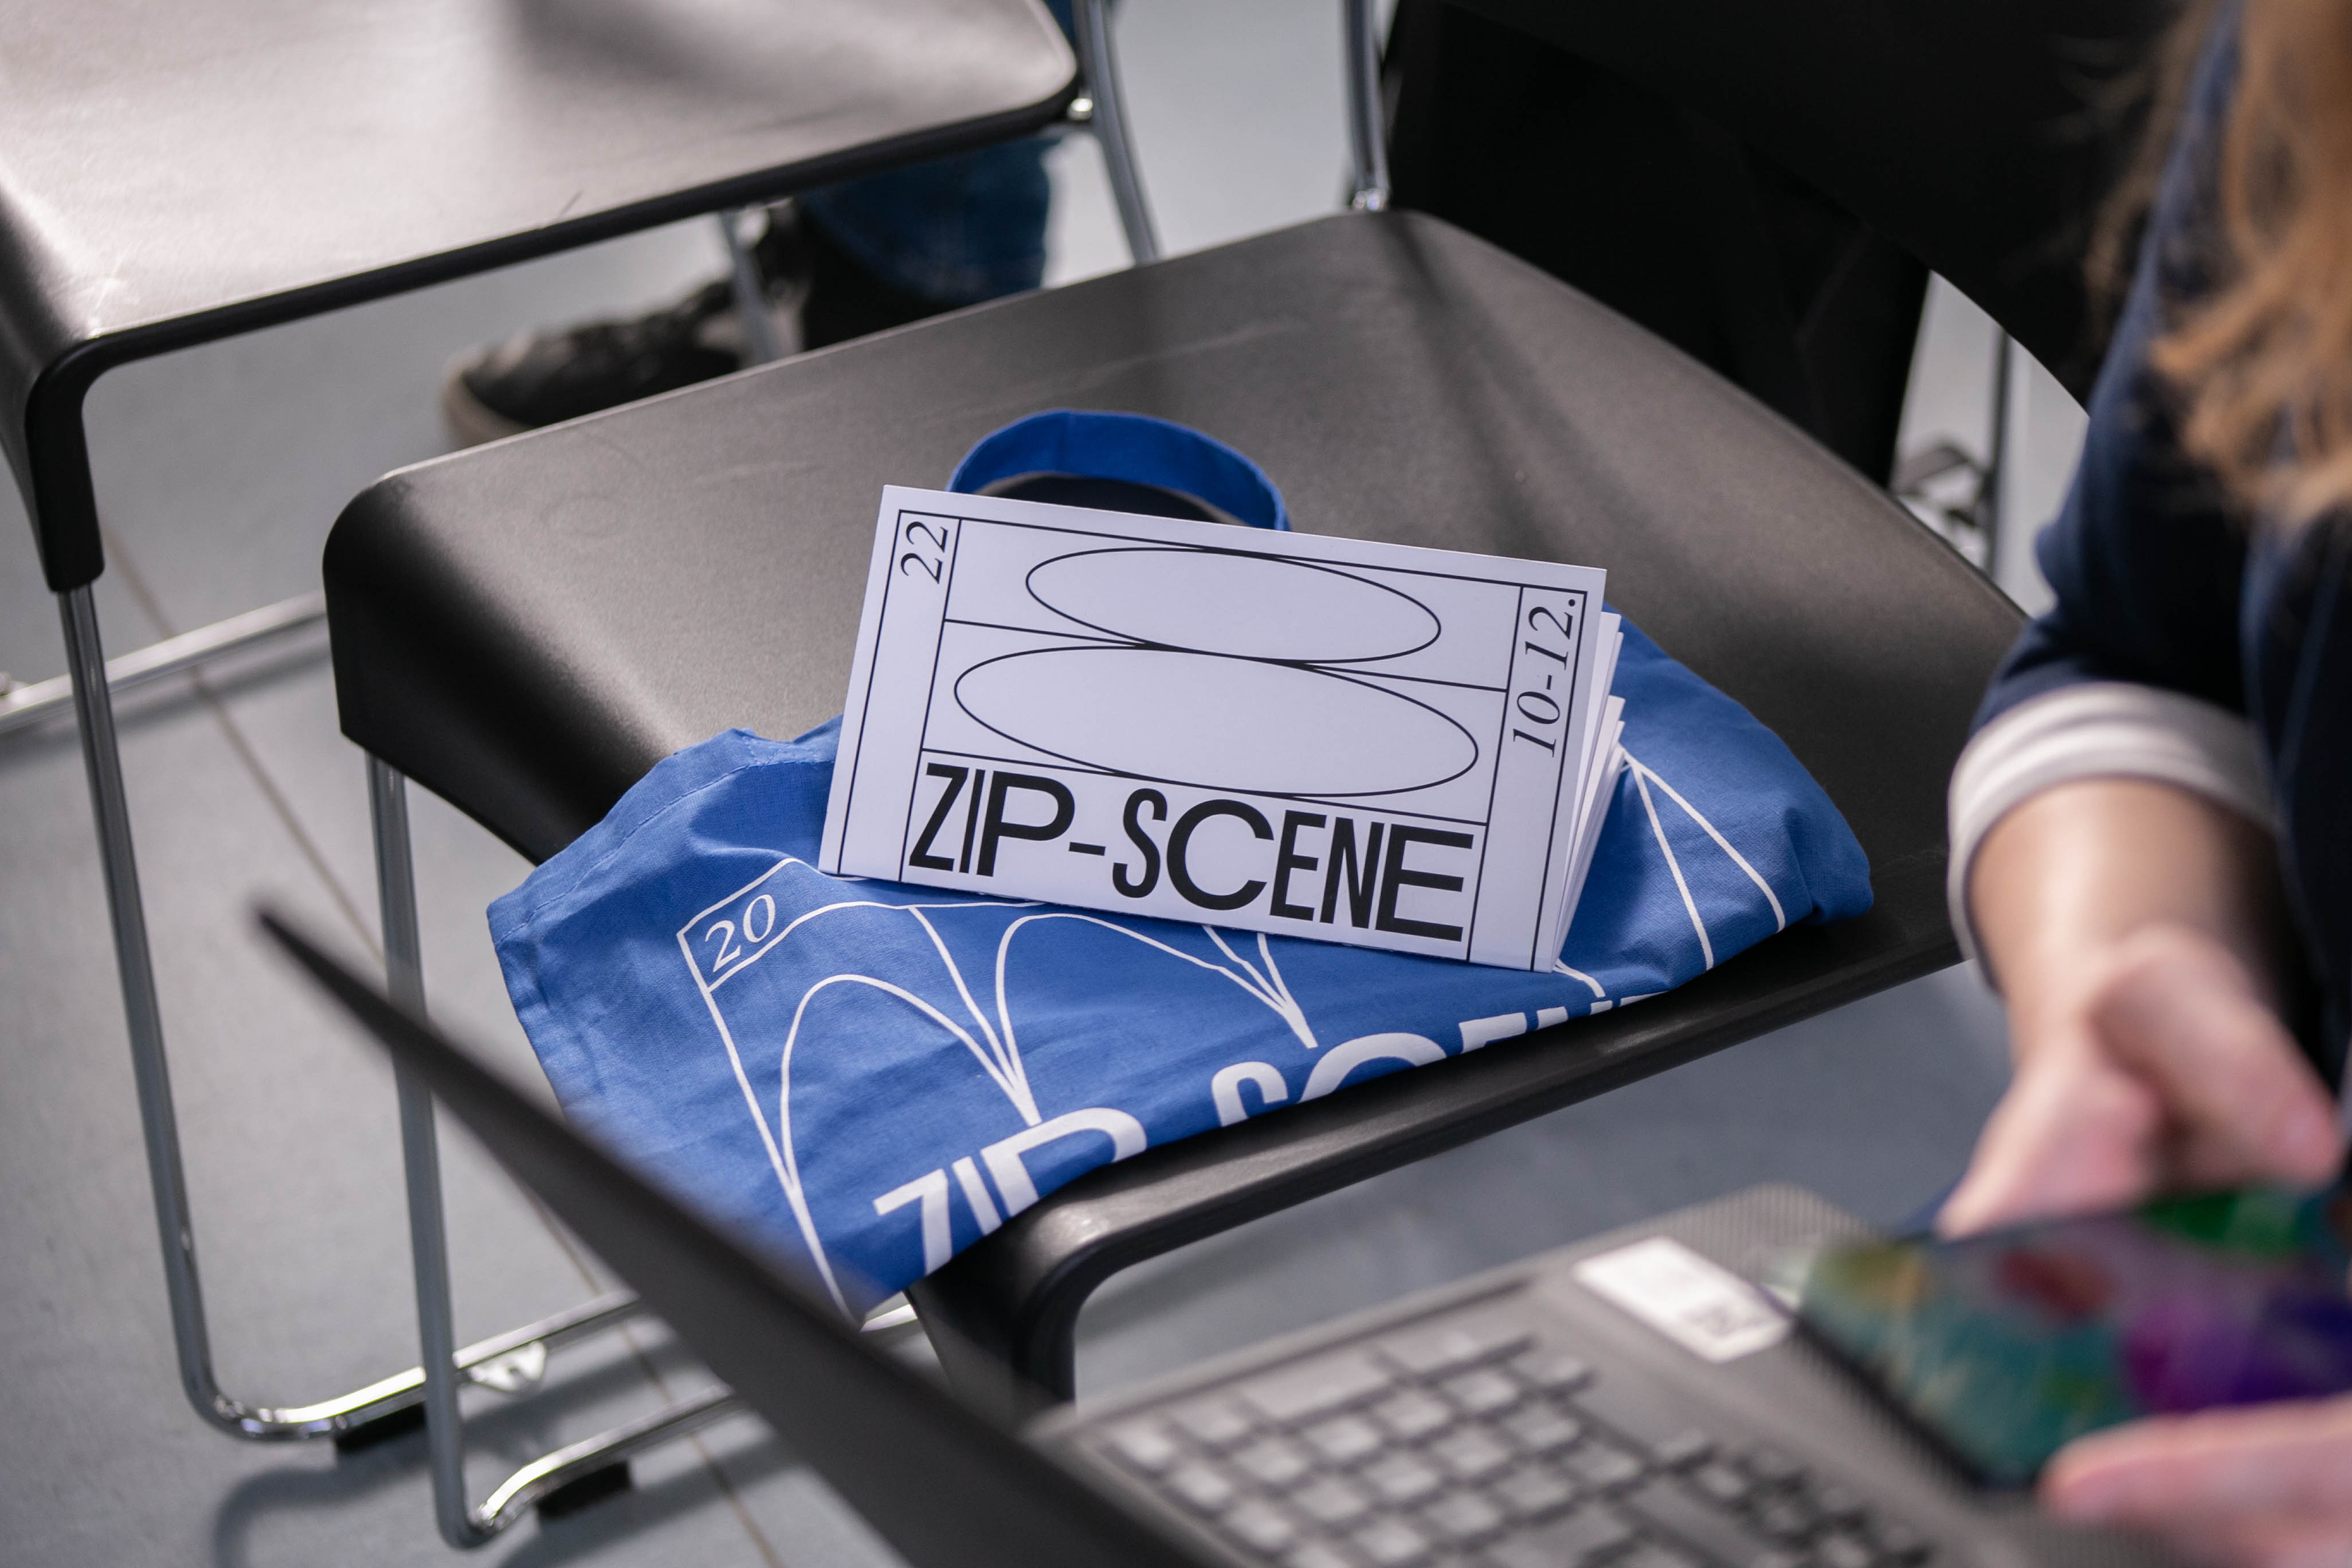 Zip-Scene Conference 2022 program book